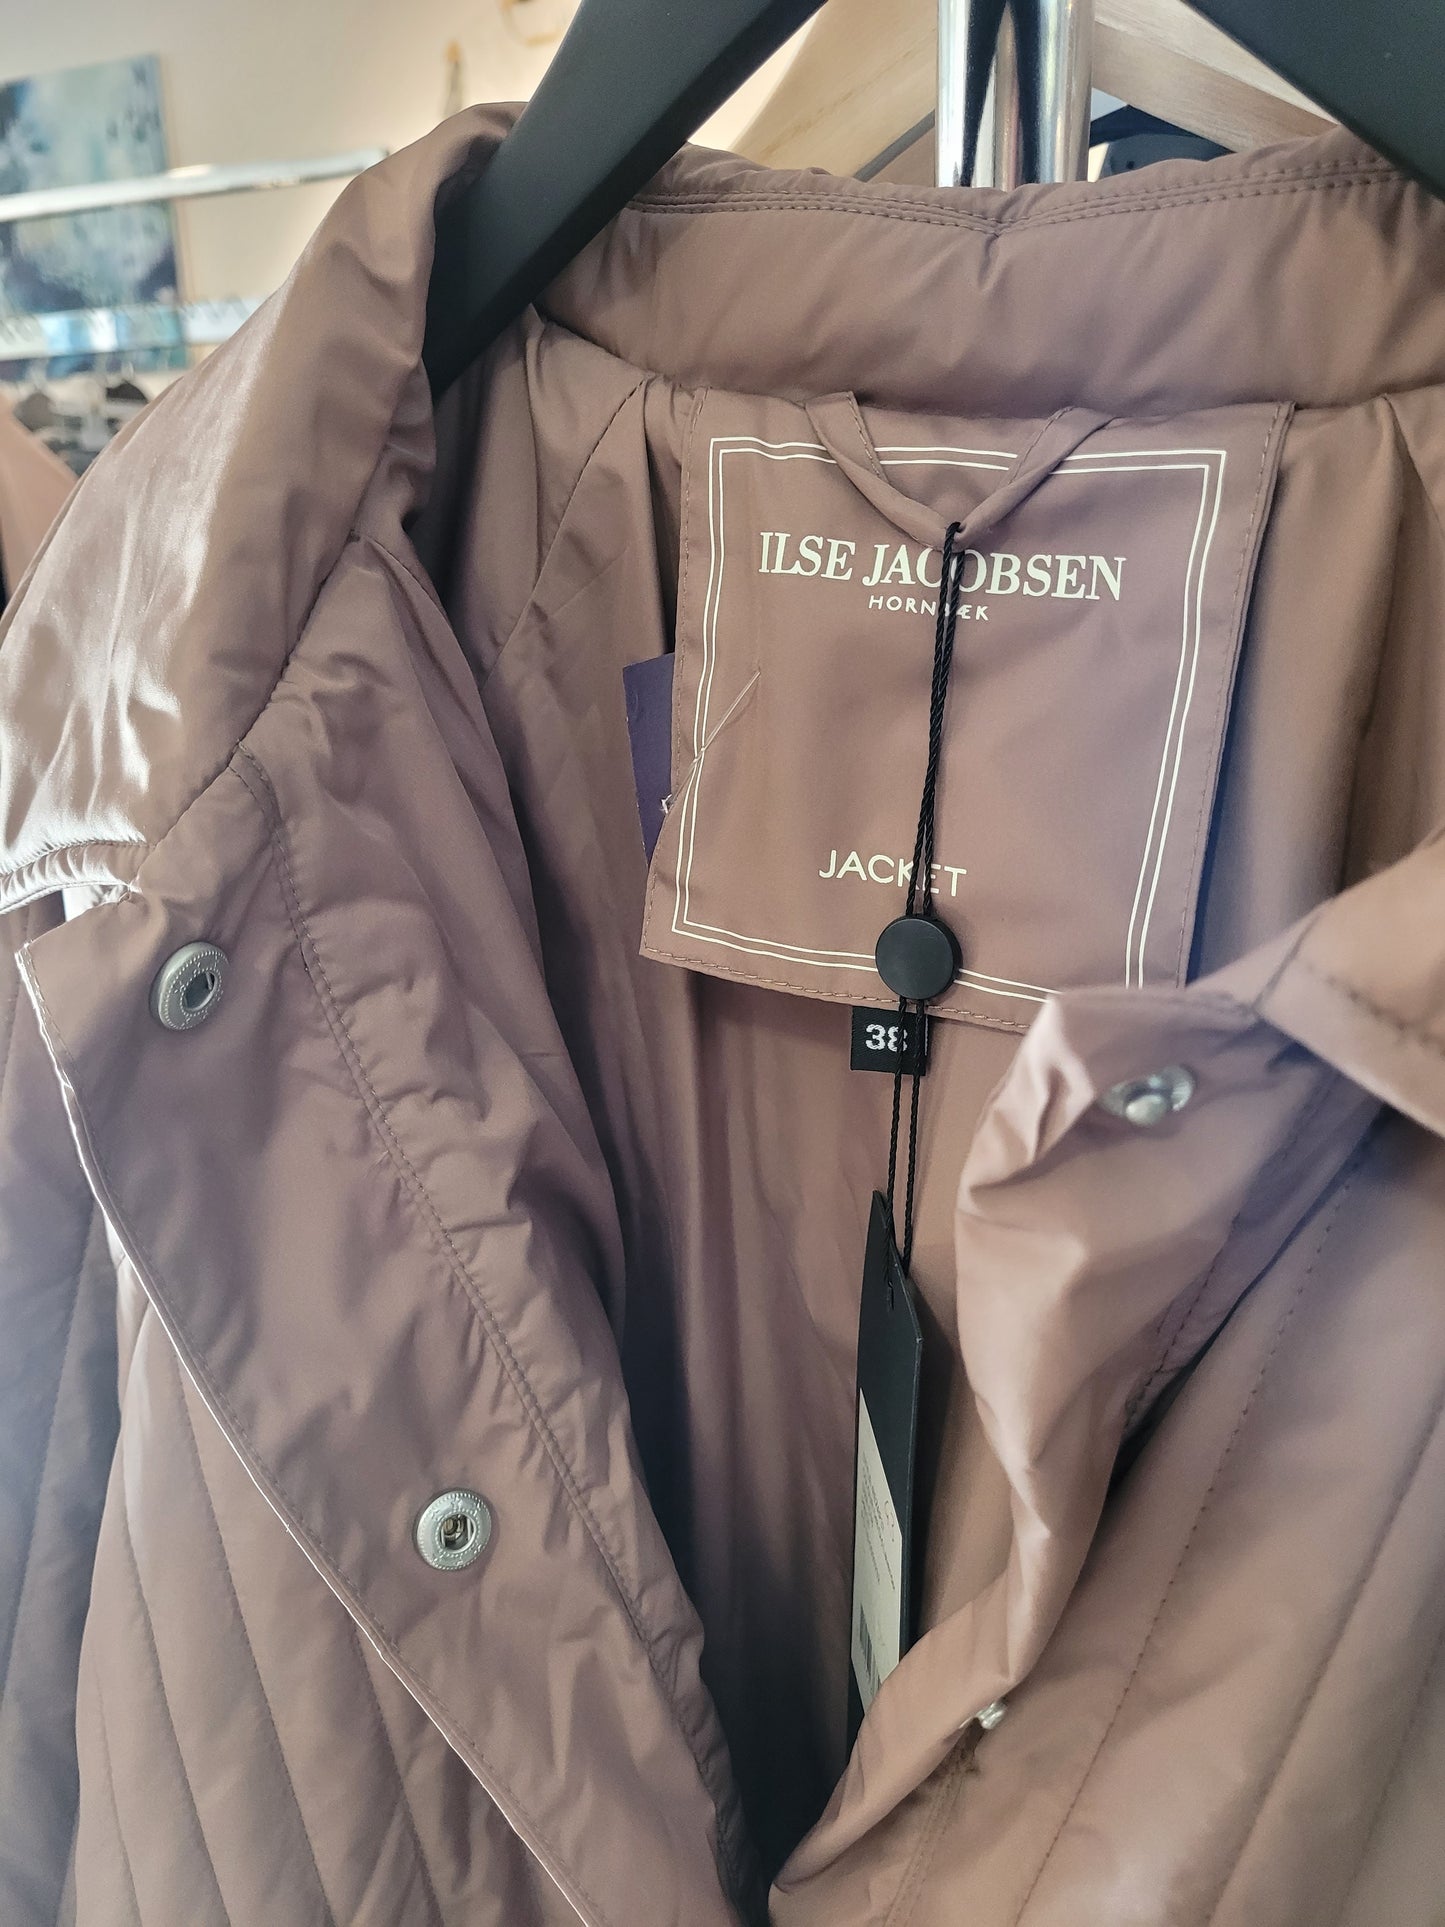 Ilse Jacobsen quilt jacket vertical